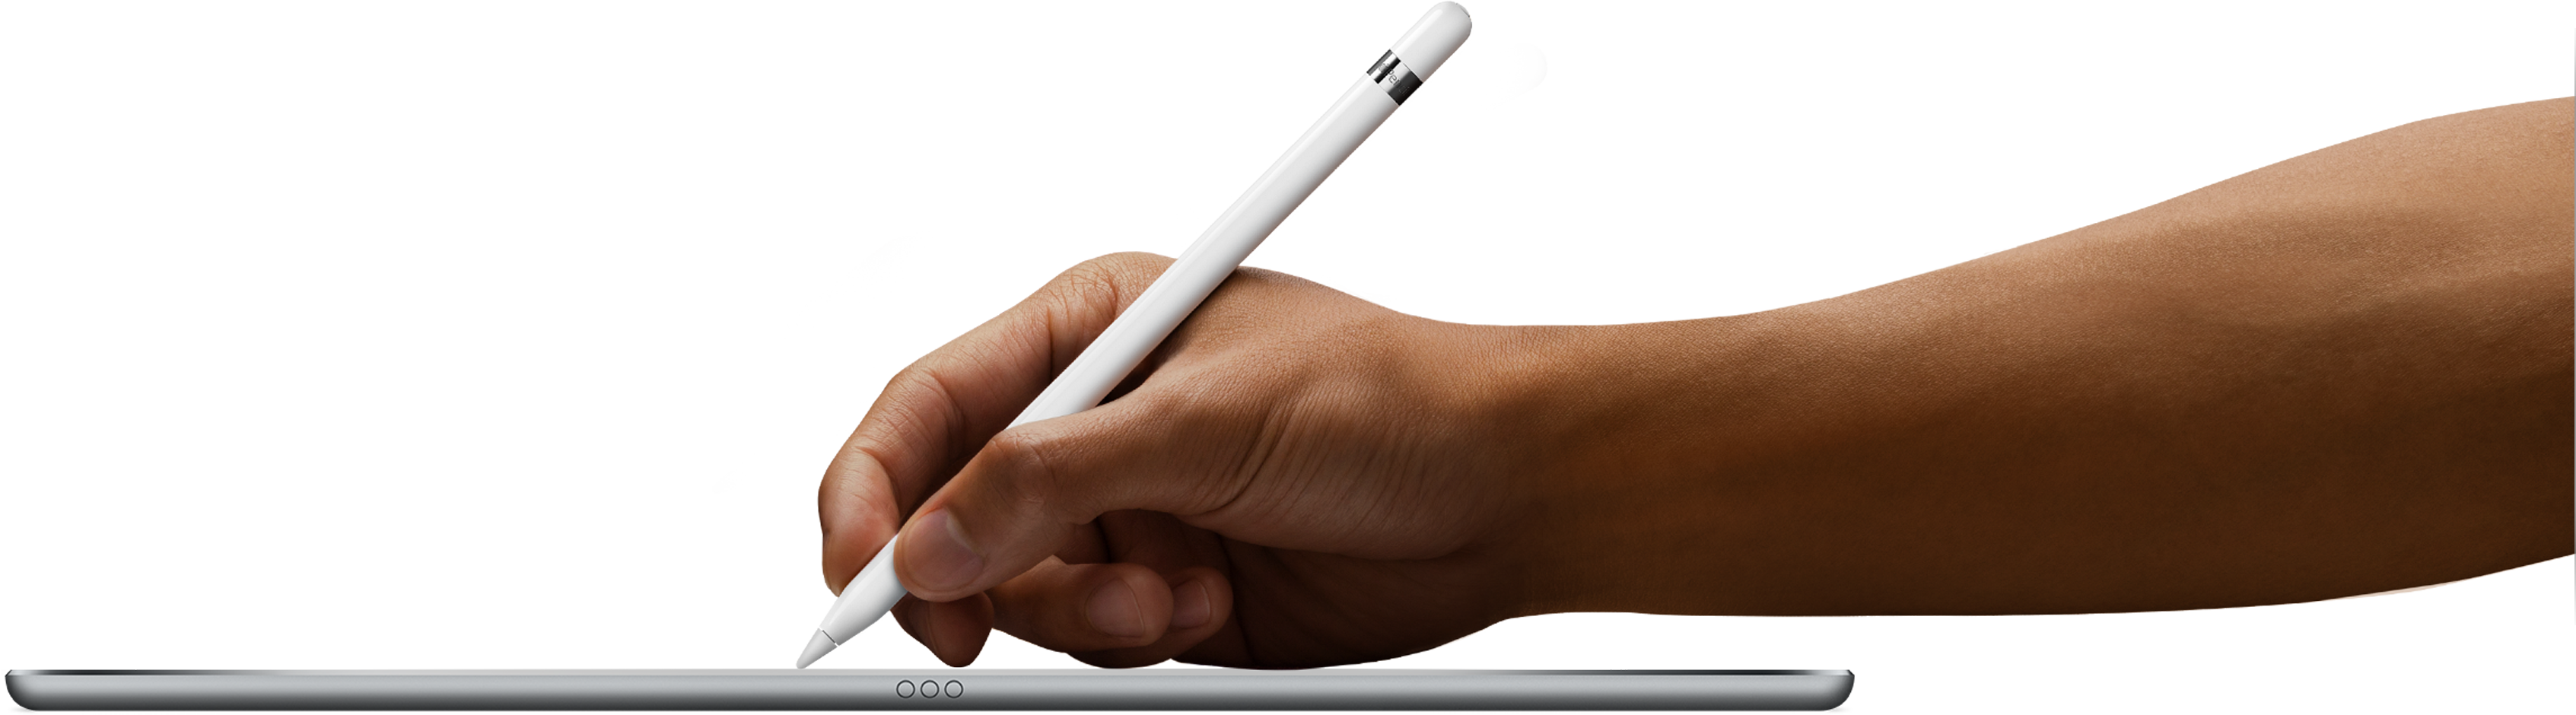 Overvloedig Jane Austen overtuigen Which has lower latency: Apple Pencil or Microsoft's Surface Pro 4 stylus?